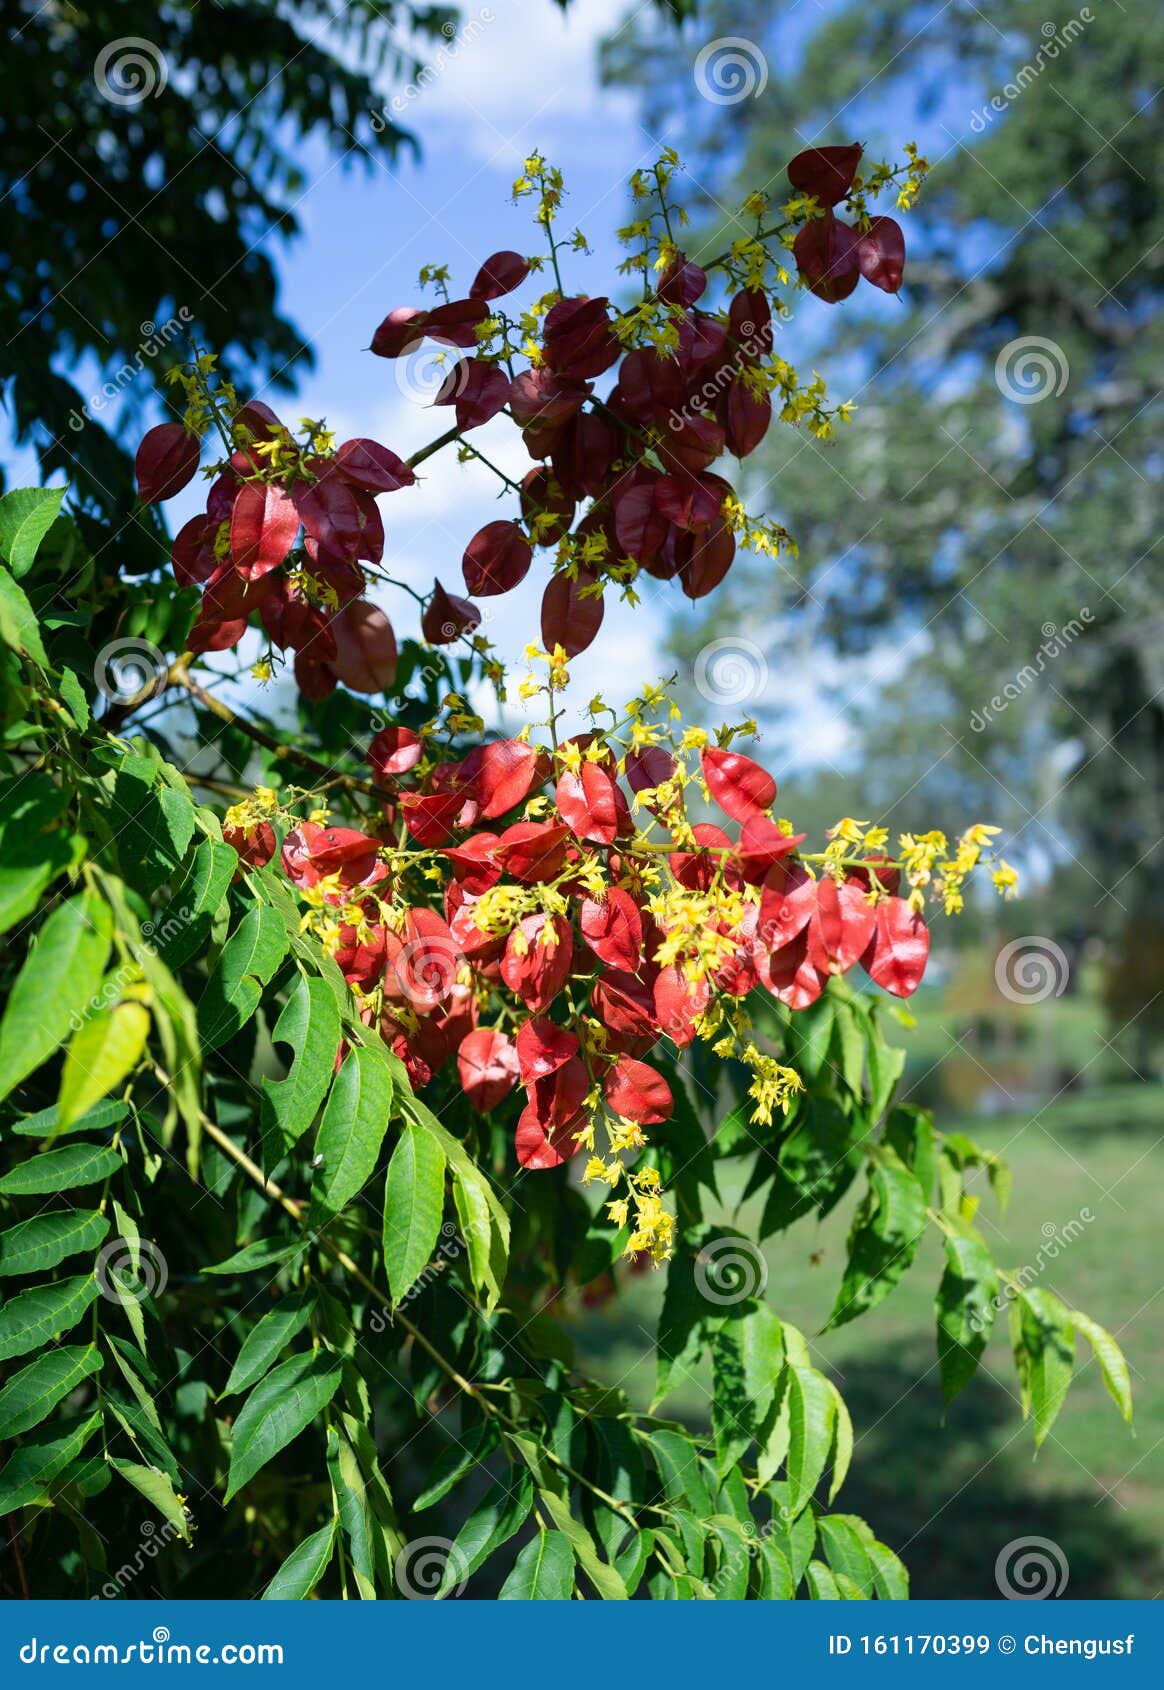 Koelreuteria Paniculata Tree  In Fall  Stock Image Image 